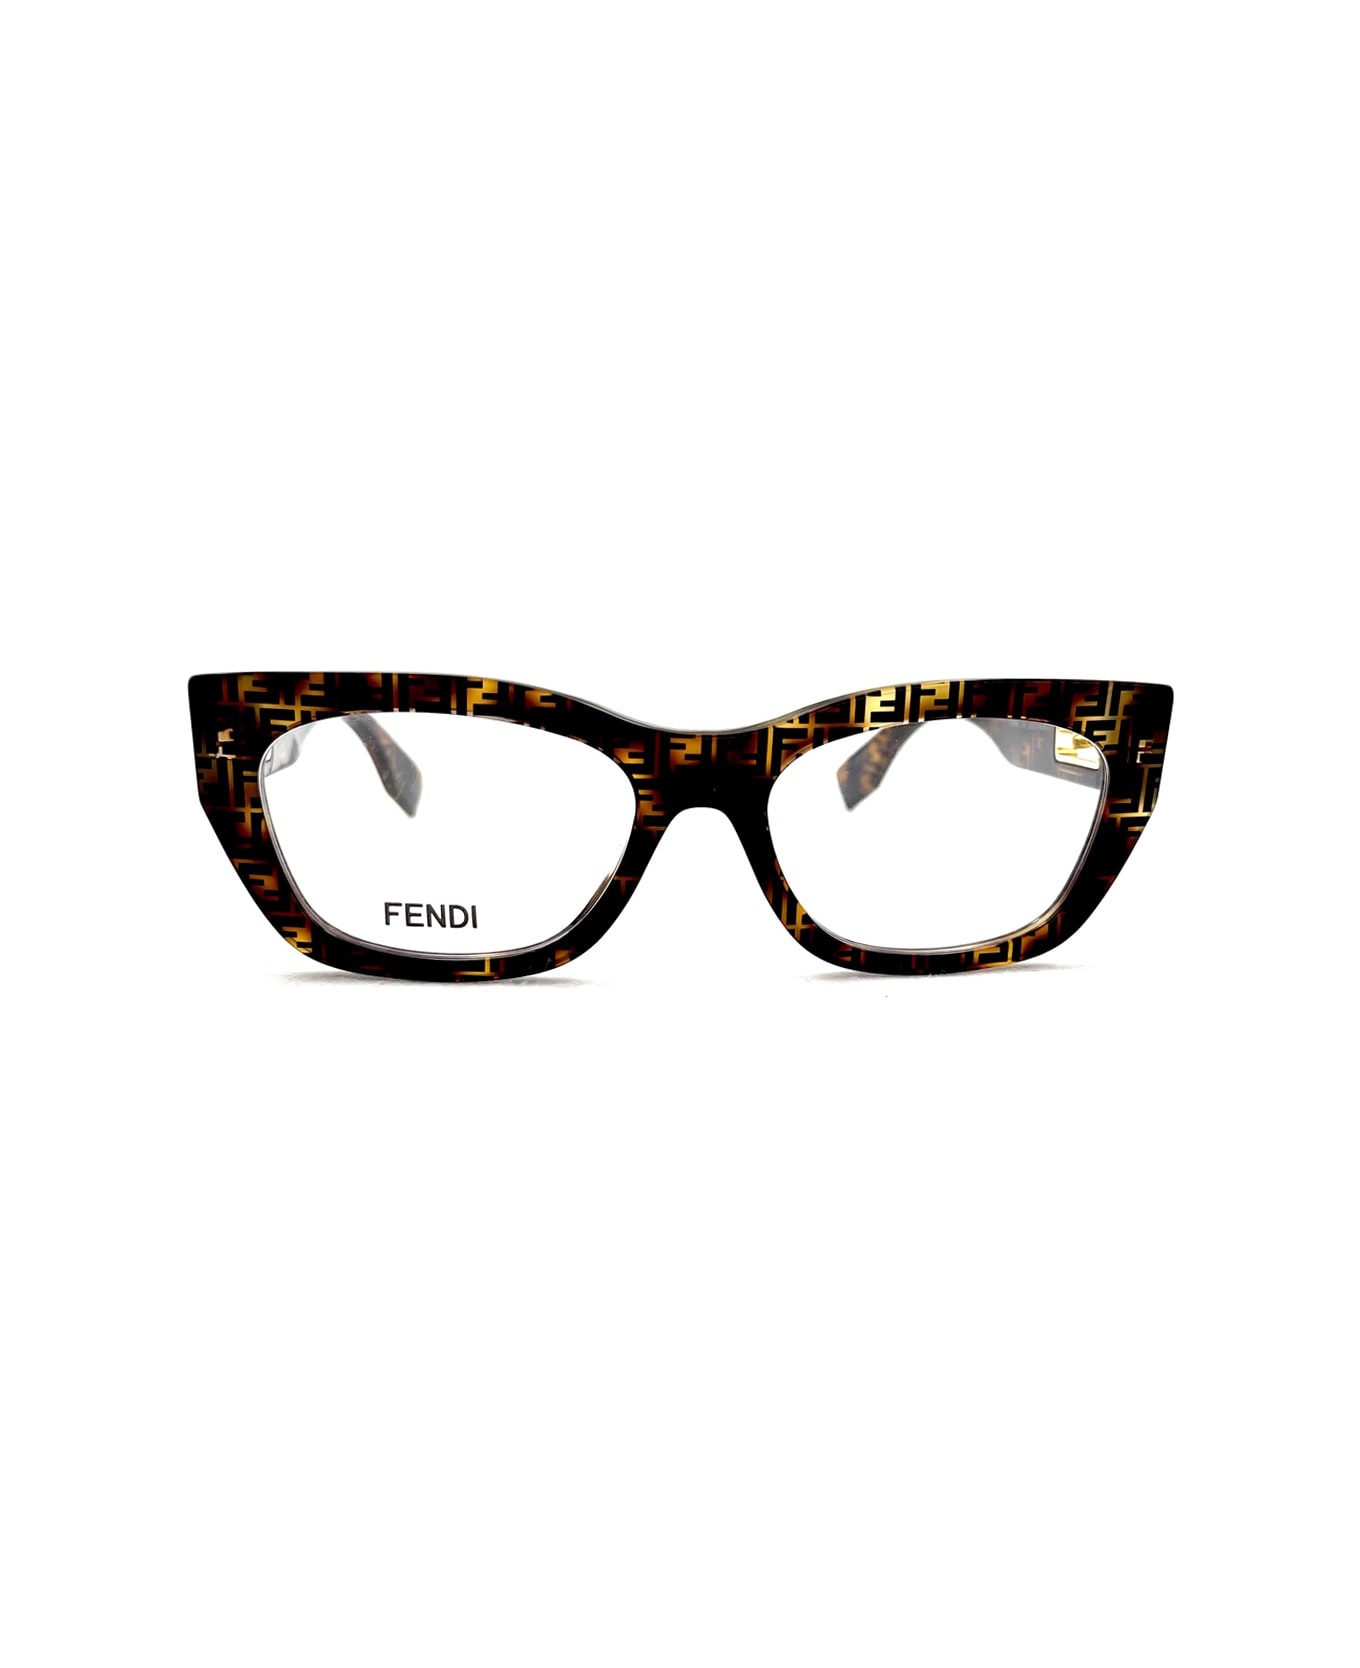 Fendi Eyewear Fe50082i 055 Glasses - Marrone